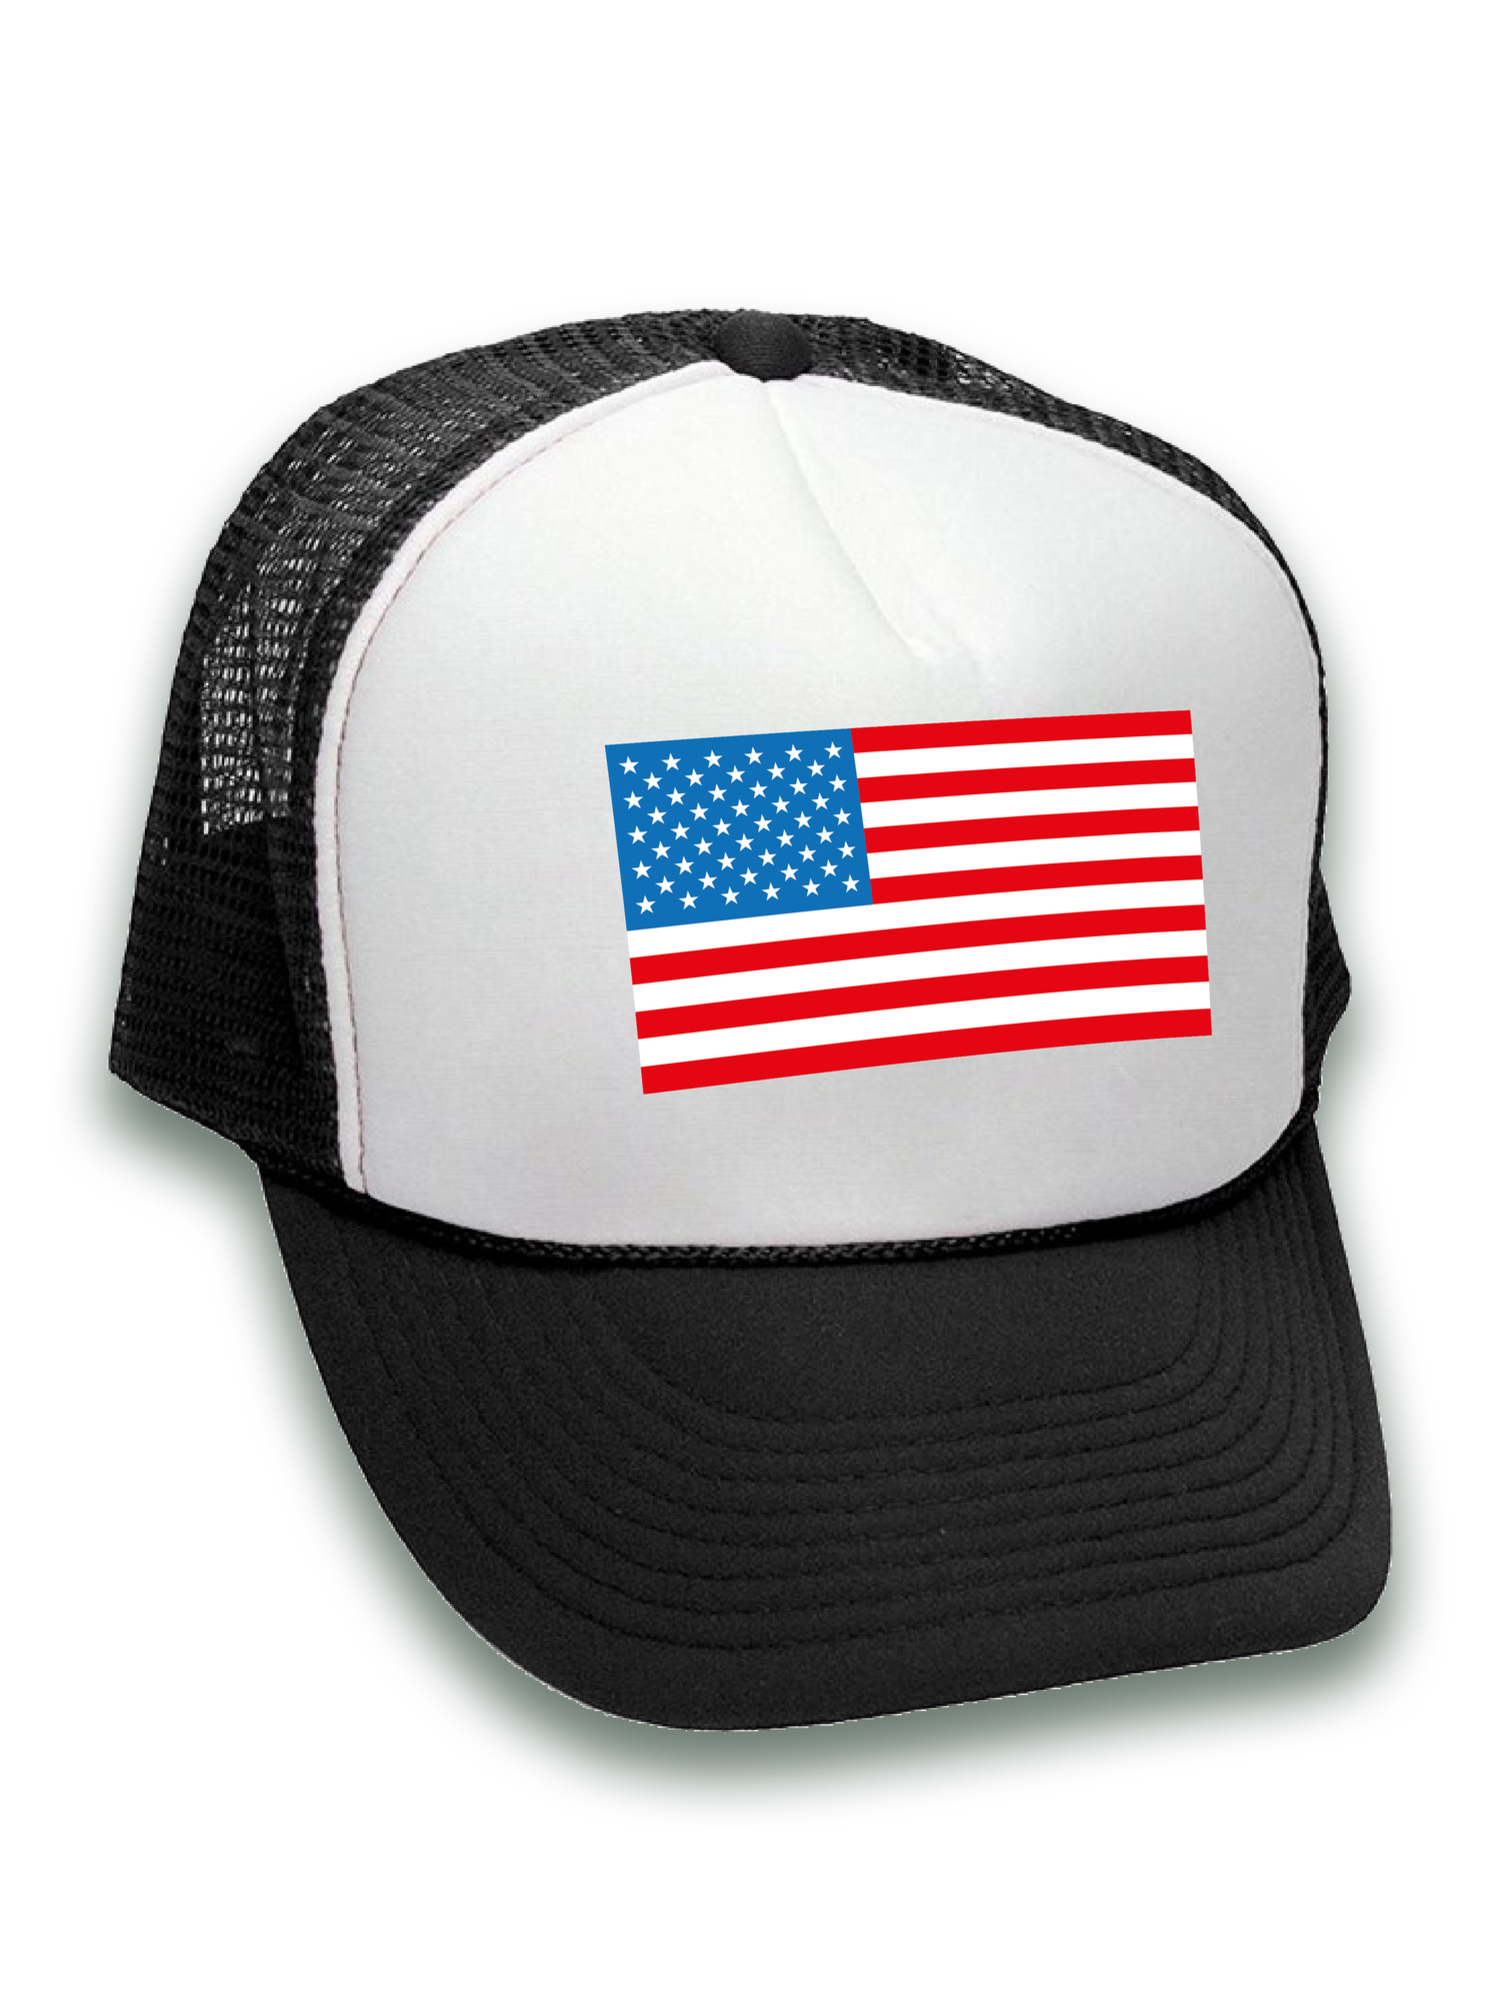 Awkward Styles USA Hat American Flag Hat USA Trucker Hat 4th of July Hats American Flag Hat USA Baseball Cap Patriotic Hat American Flag Men Women 4th of July Hat 4th of July Accessories - image 2 of 6